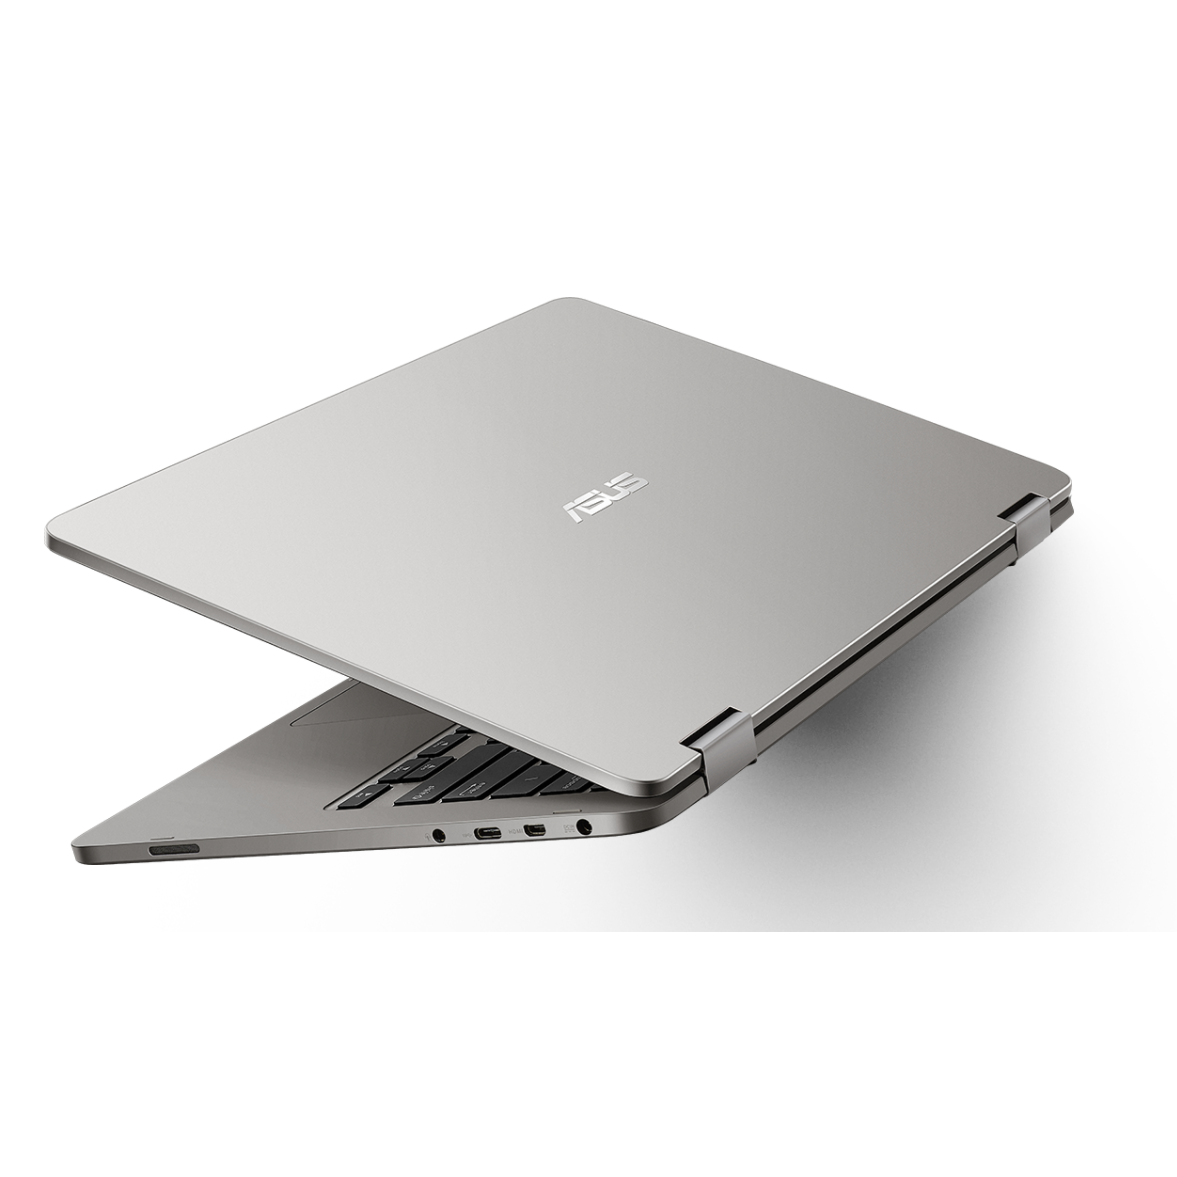 ASUS Vivobook Flip TP401MA - Intel Pentium N5000, 4GB RAM, 128GB HDD, 14" - Grey